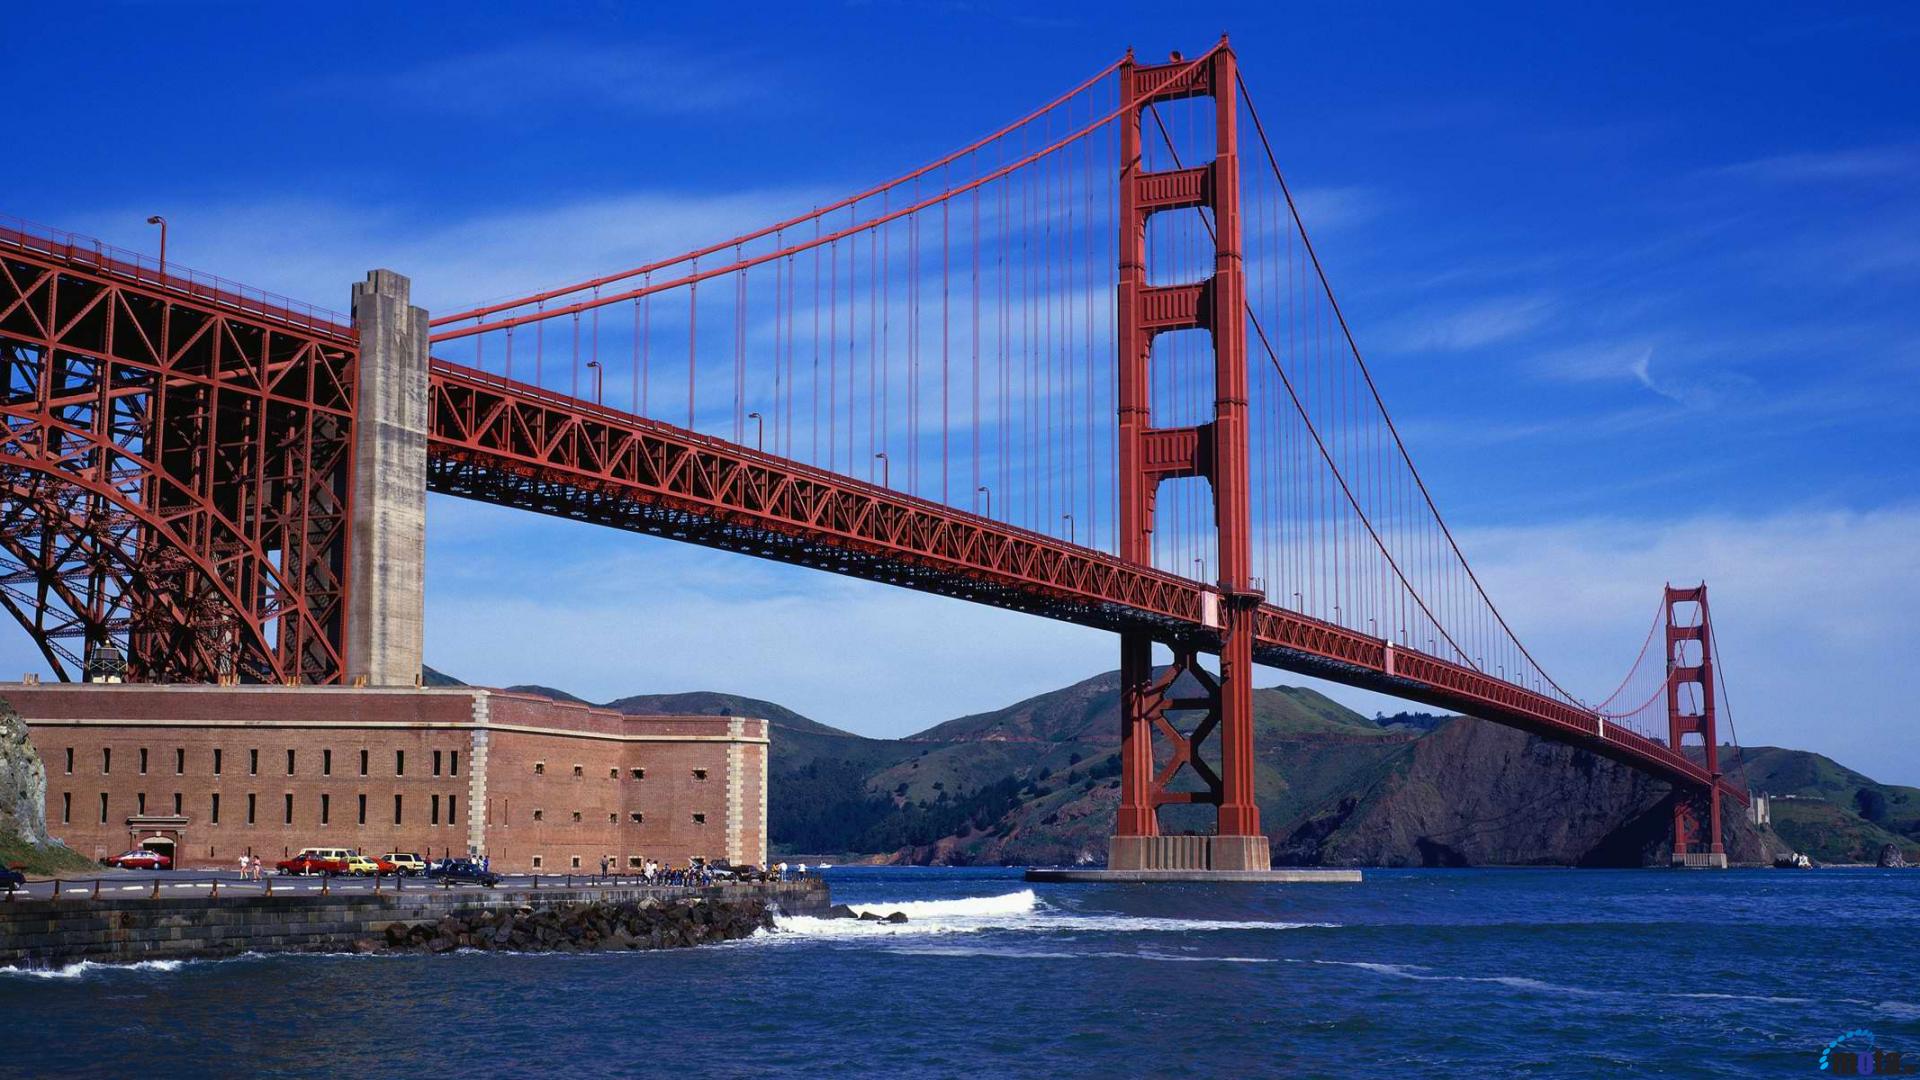 Download Wallpaper Panorama of Golden Gate suspension bridge x